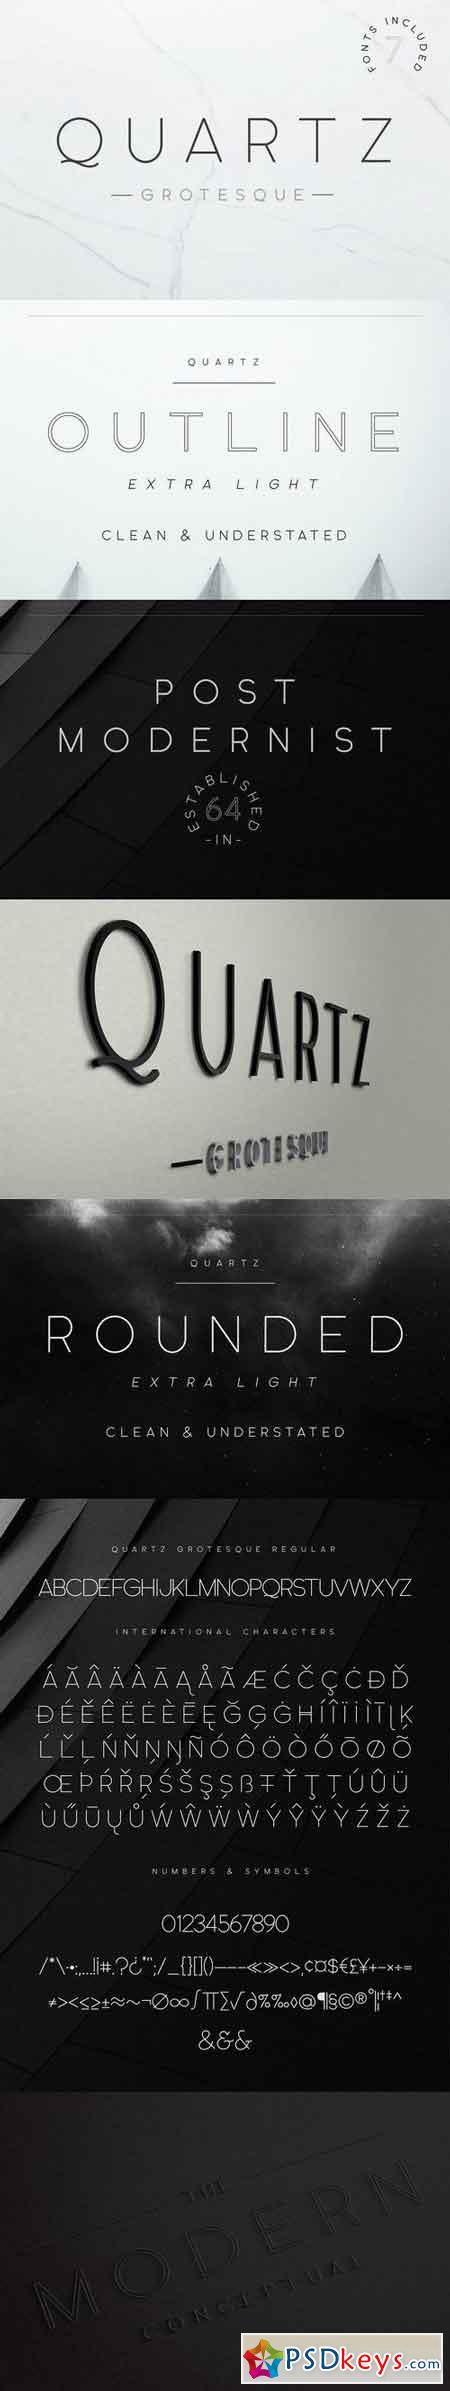 Quartz Grotesque - 7 Font Styles 1443190